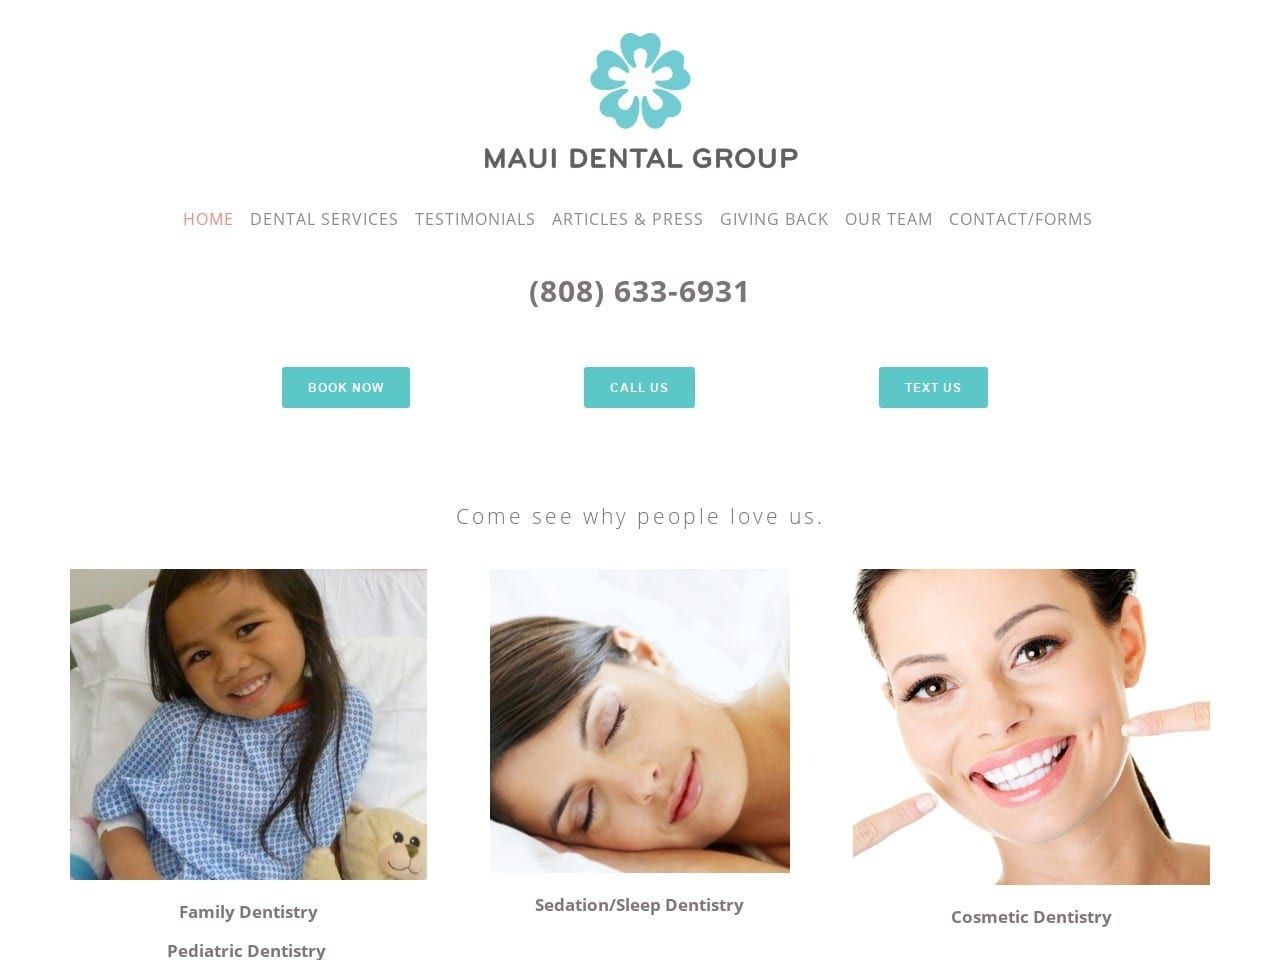 Maui Dental Group Website Screenshot from mauidentalgroup.com